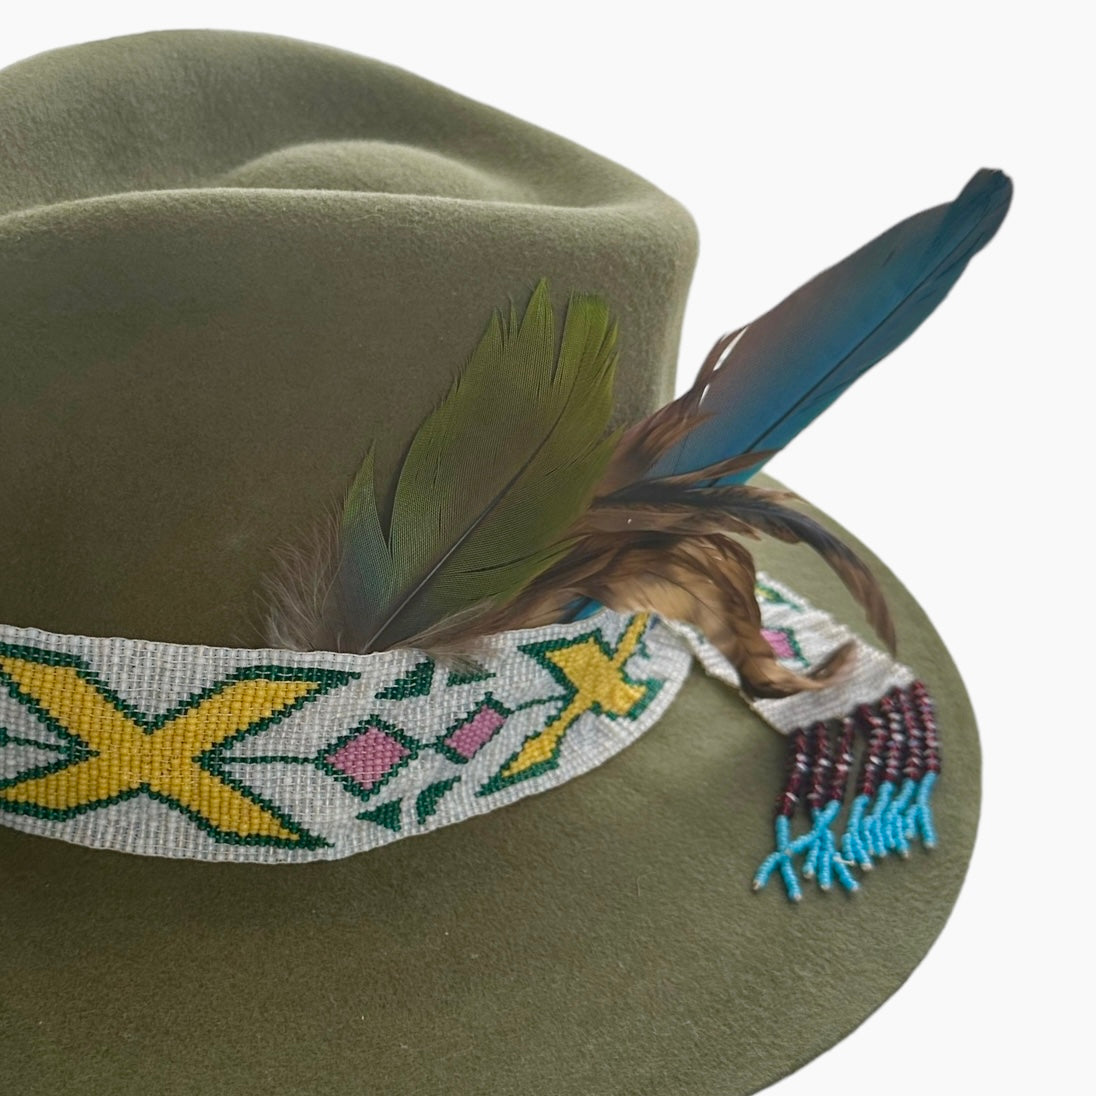 Olive Teardrop Felt with Vintage Beaded Hat Band